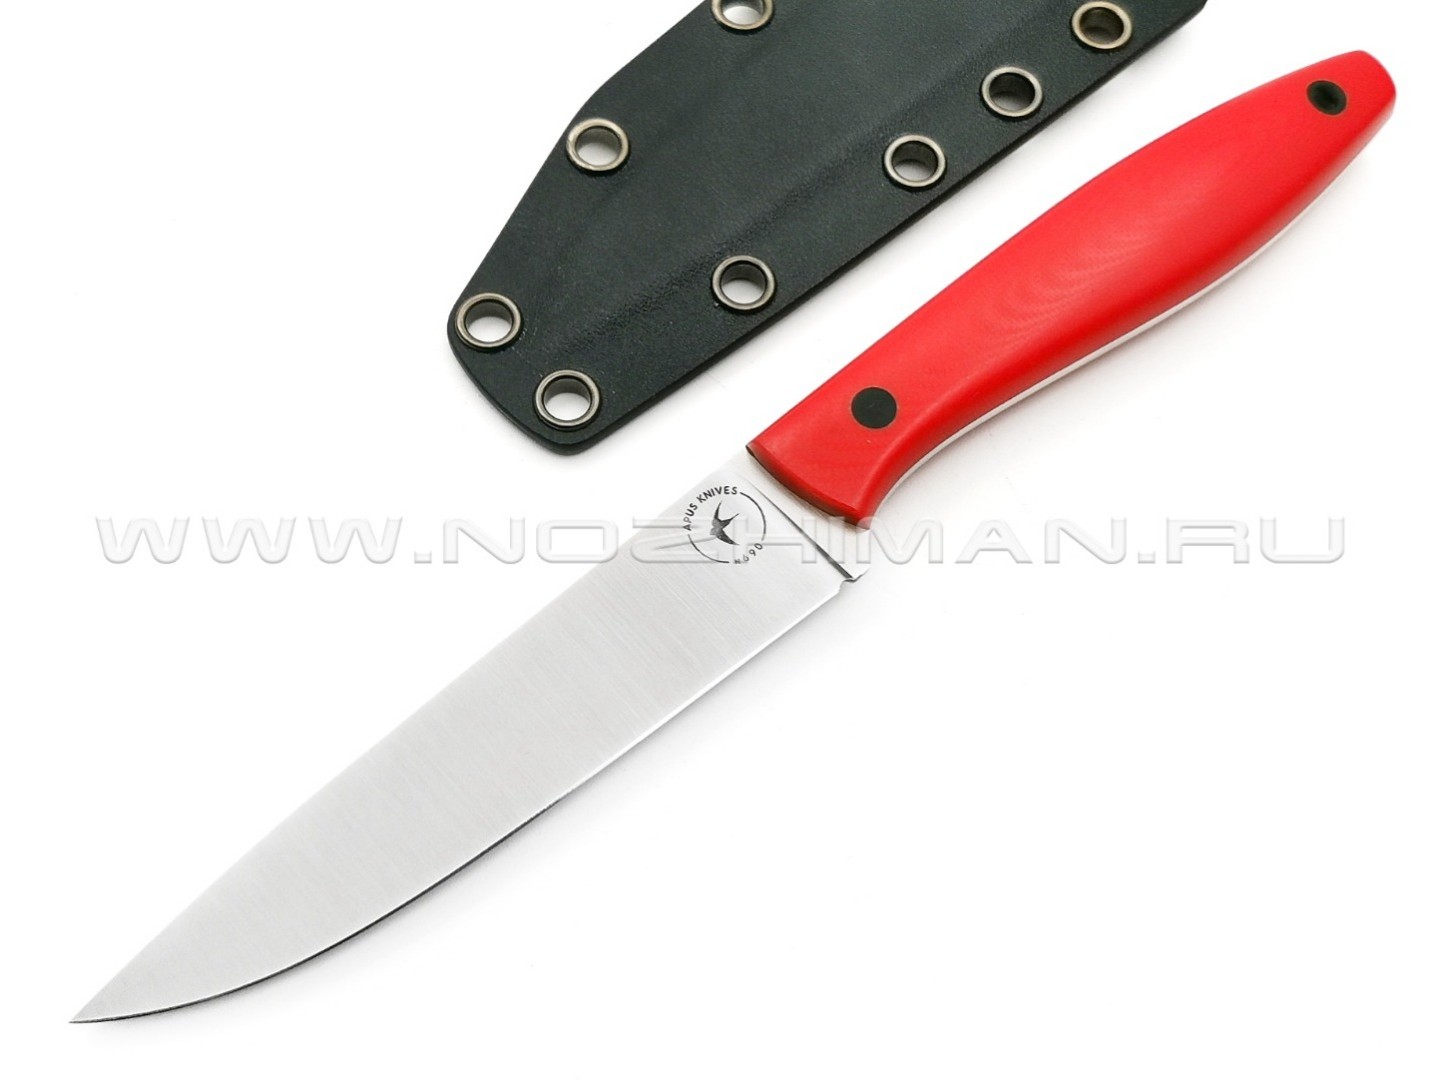 Apus Knives нож Paring сталь N690, рукоять G10 red